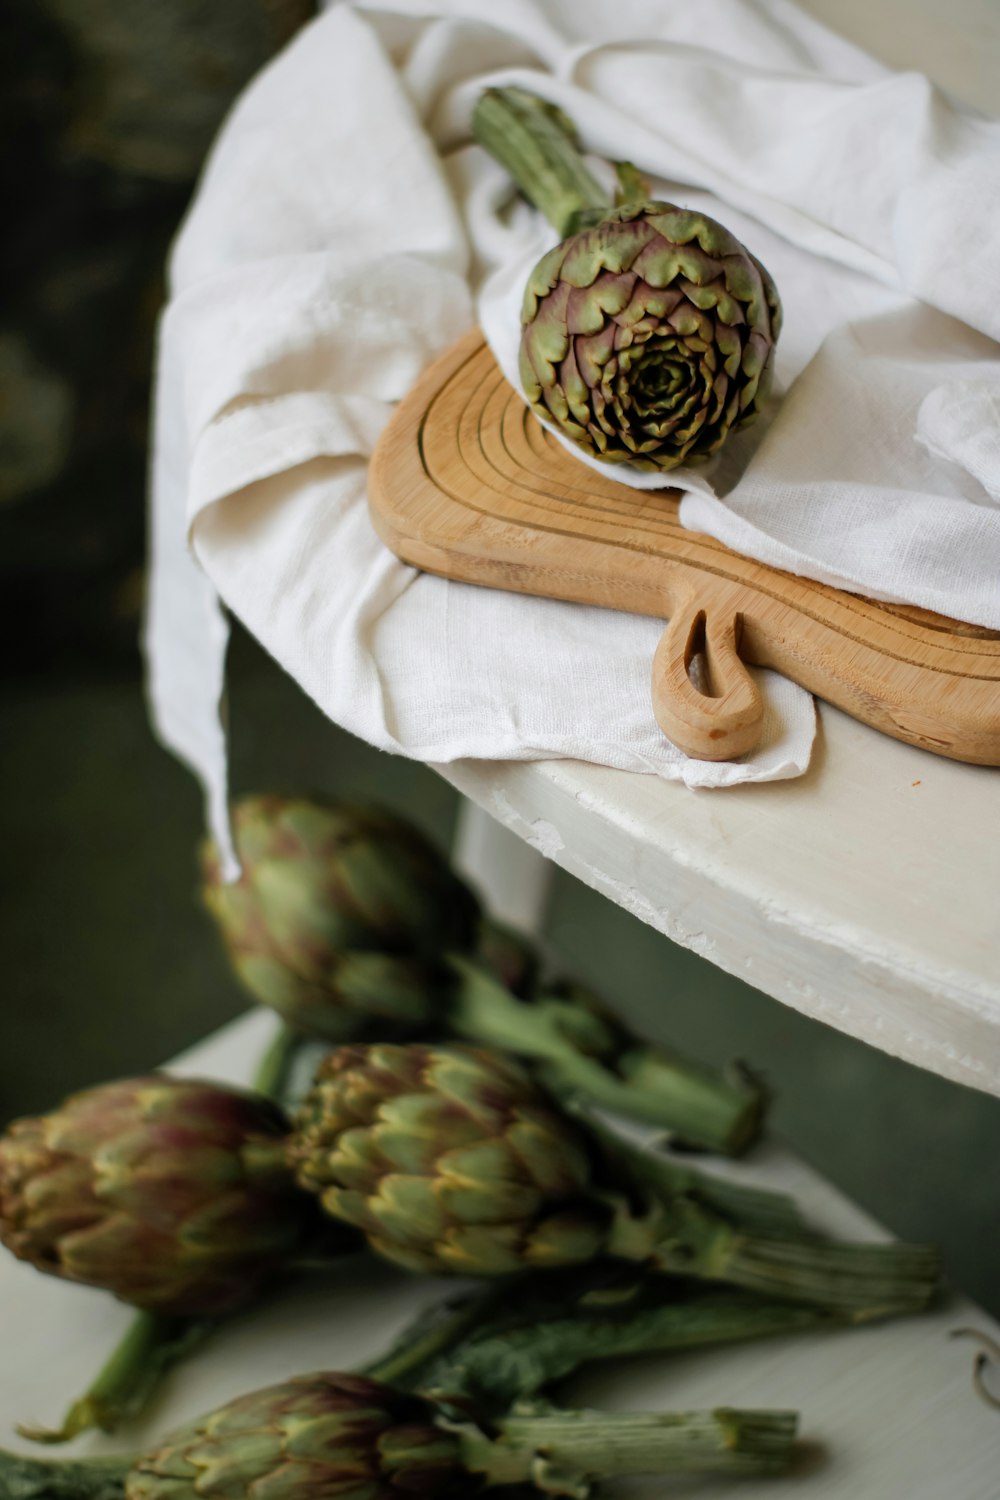 brown pine cone on white textile